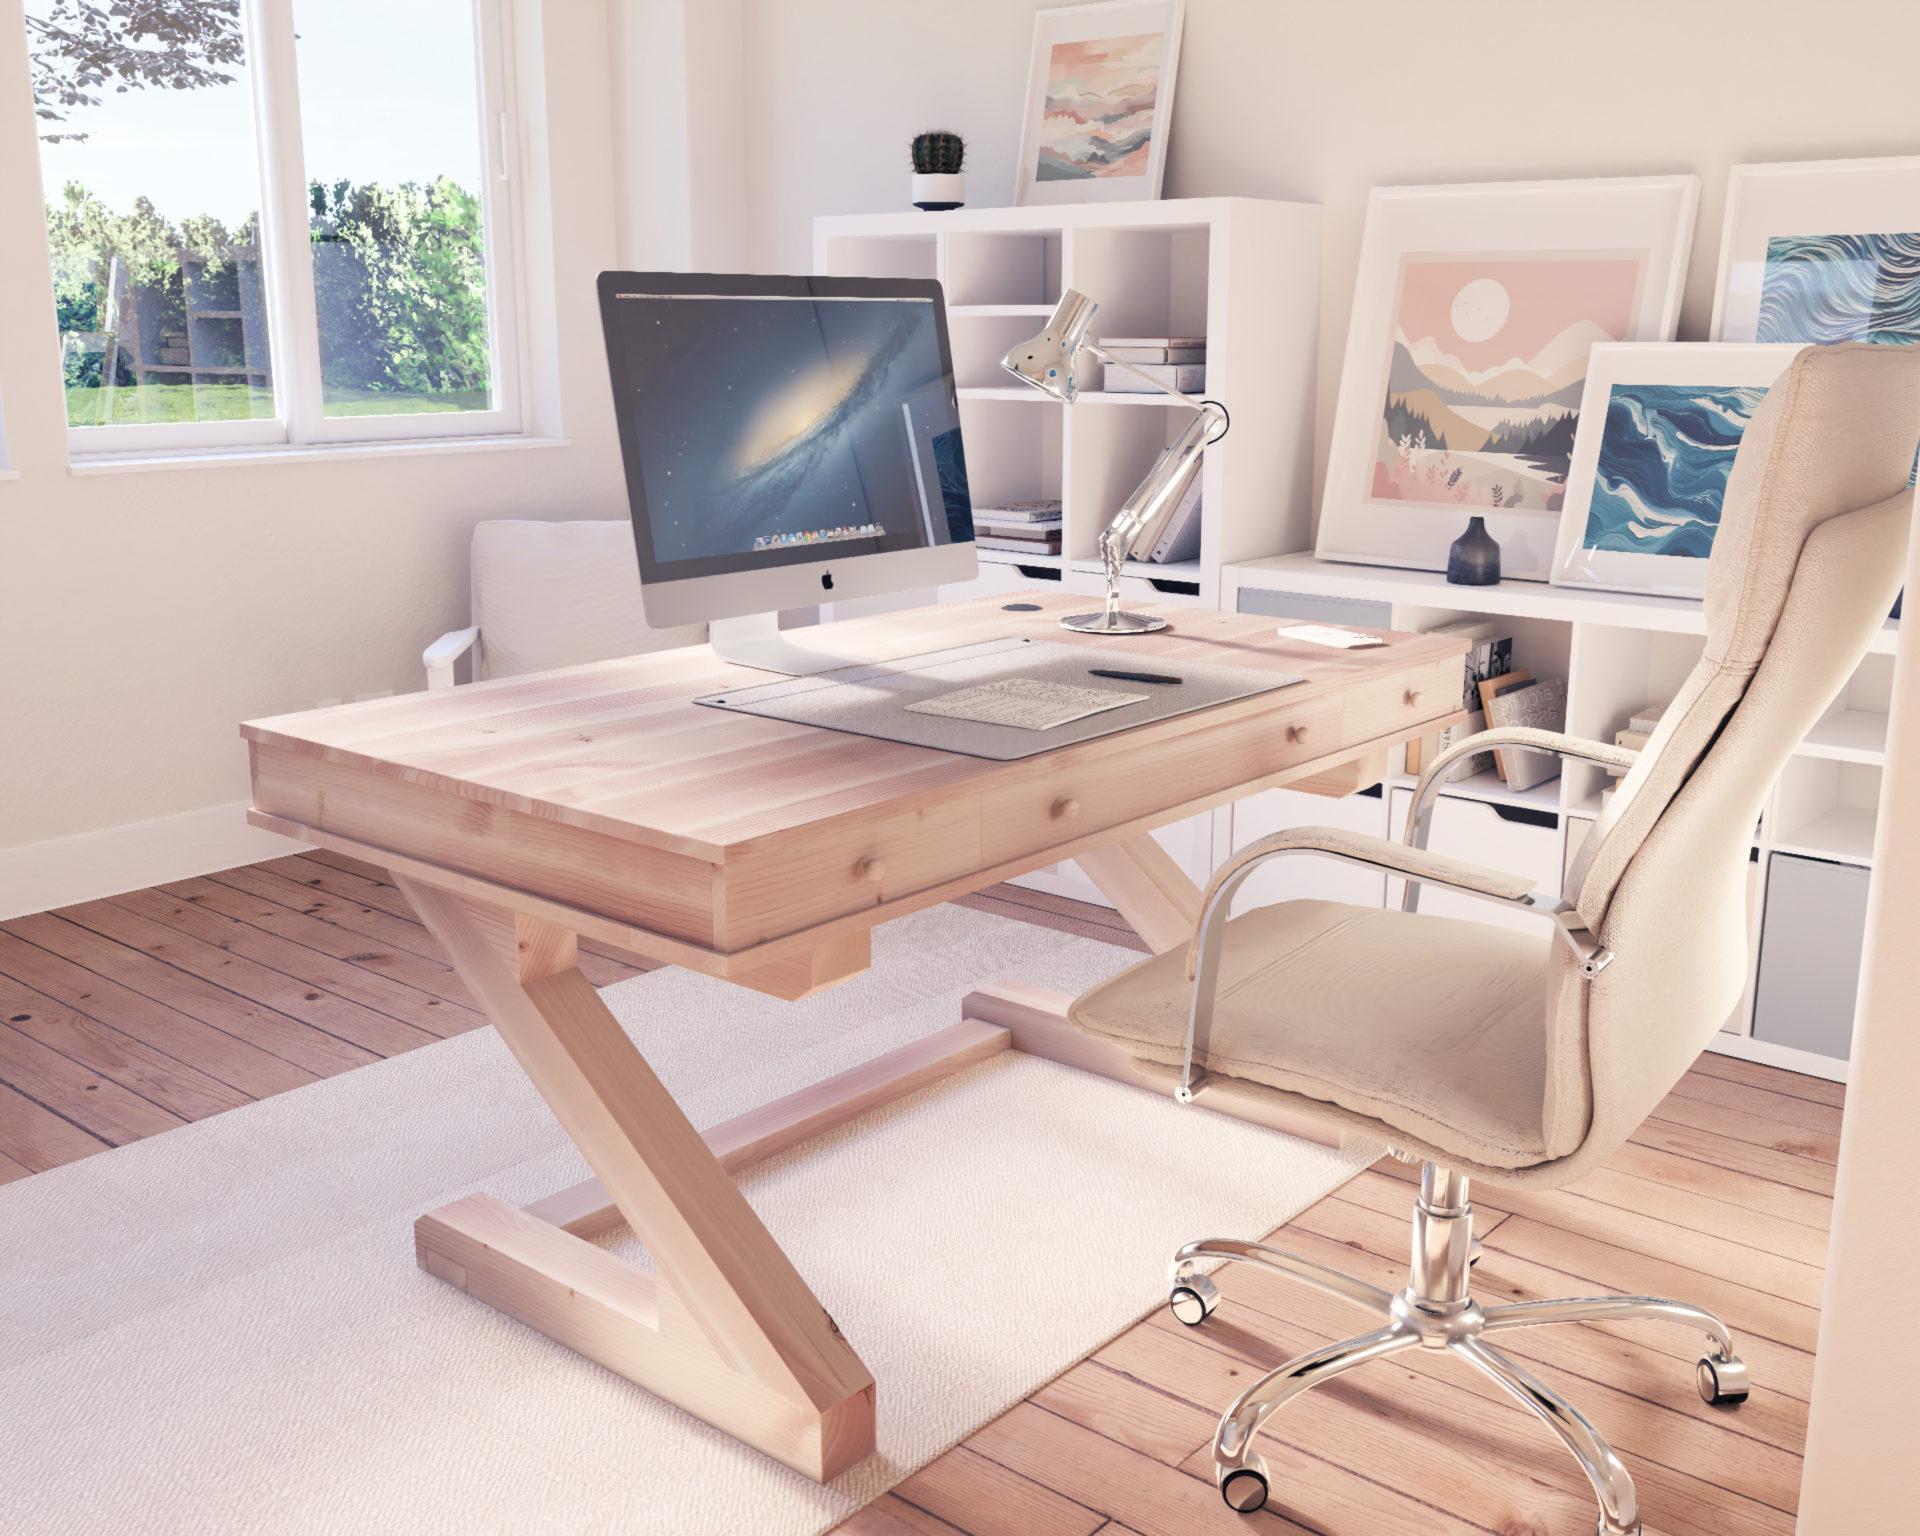 Wooden Desk for Home Office, Low Profile Desk, Floating Monitor Shelf,  Monitor Elevator, Clutter Cover, Wire Hider. Natural Wood Desk. 